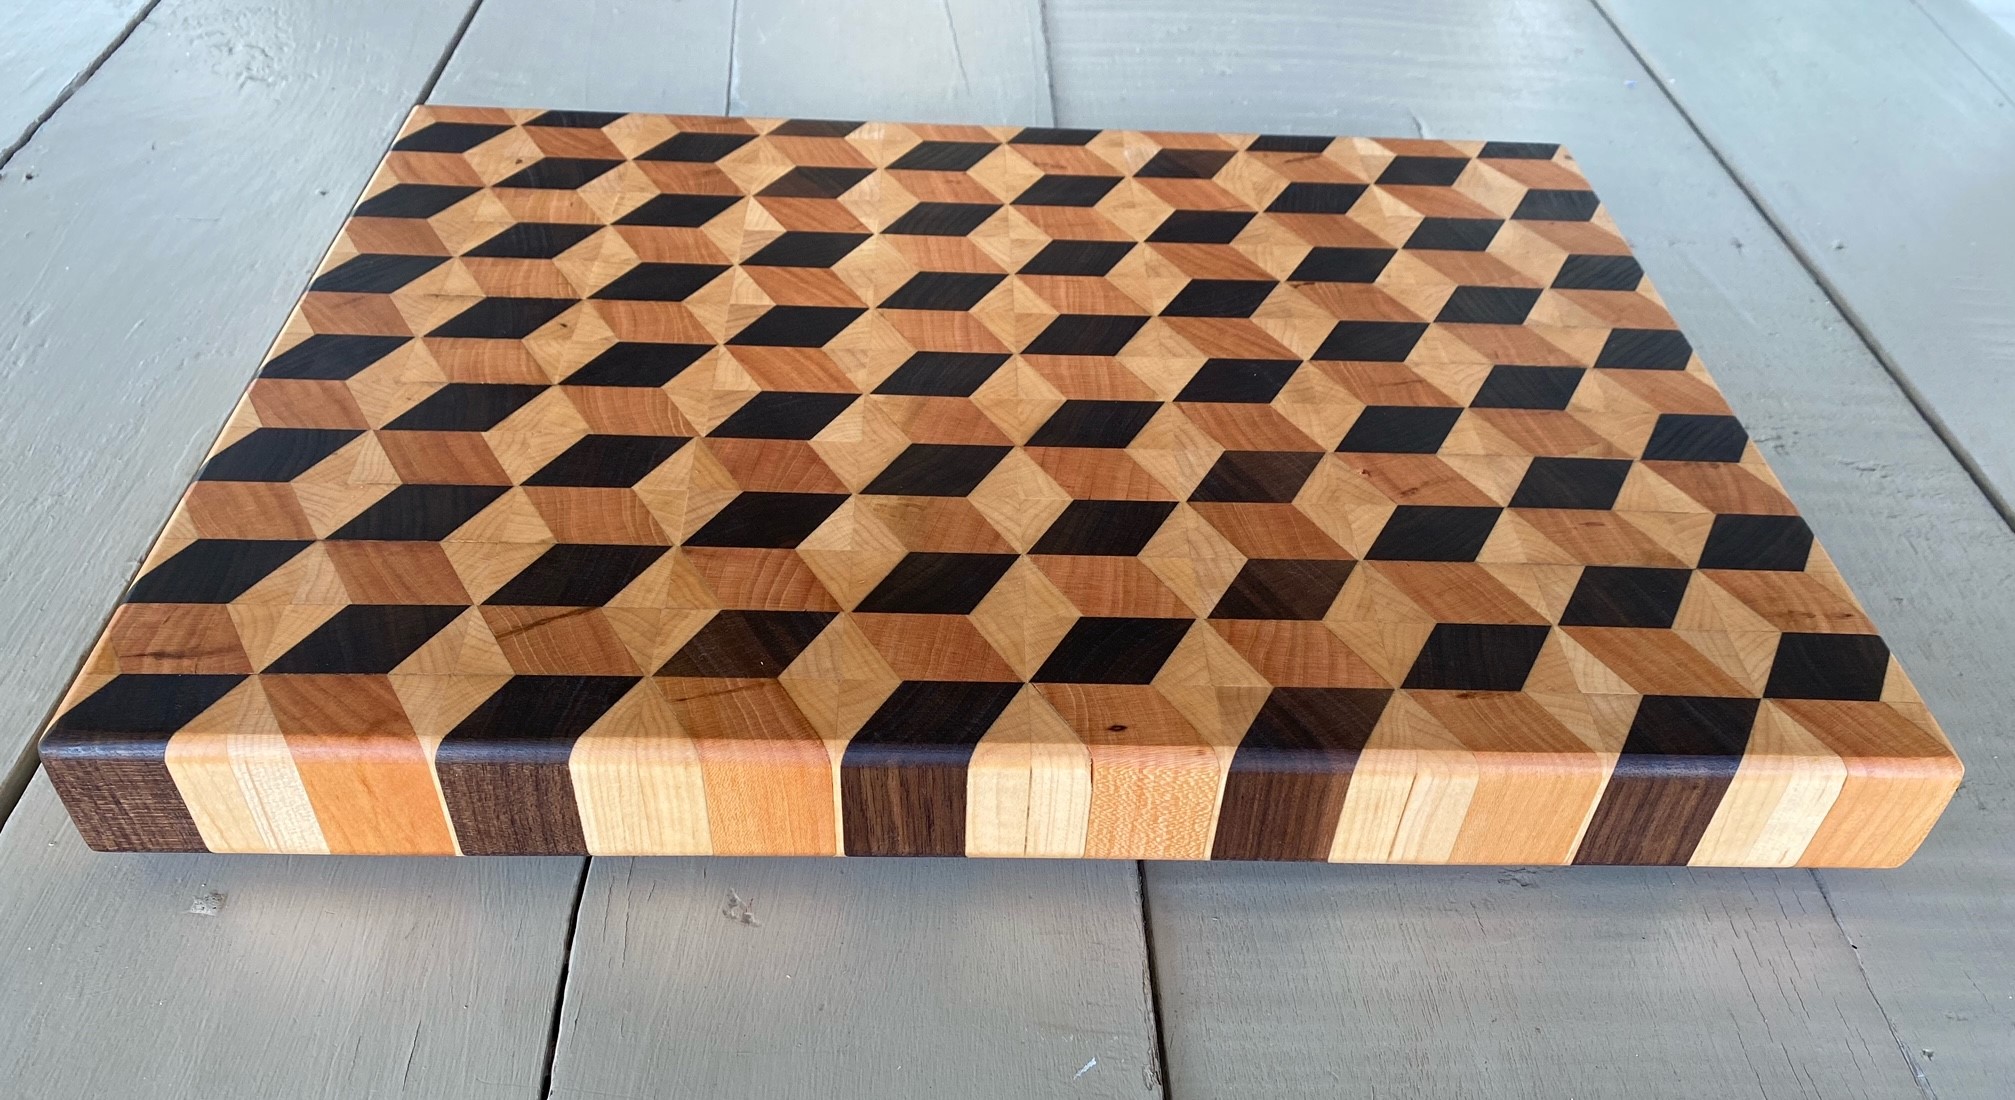 3d tumbling block cutting board plans